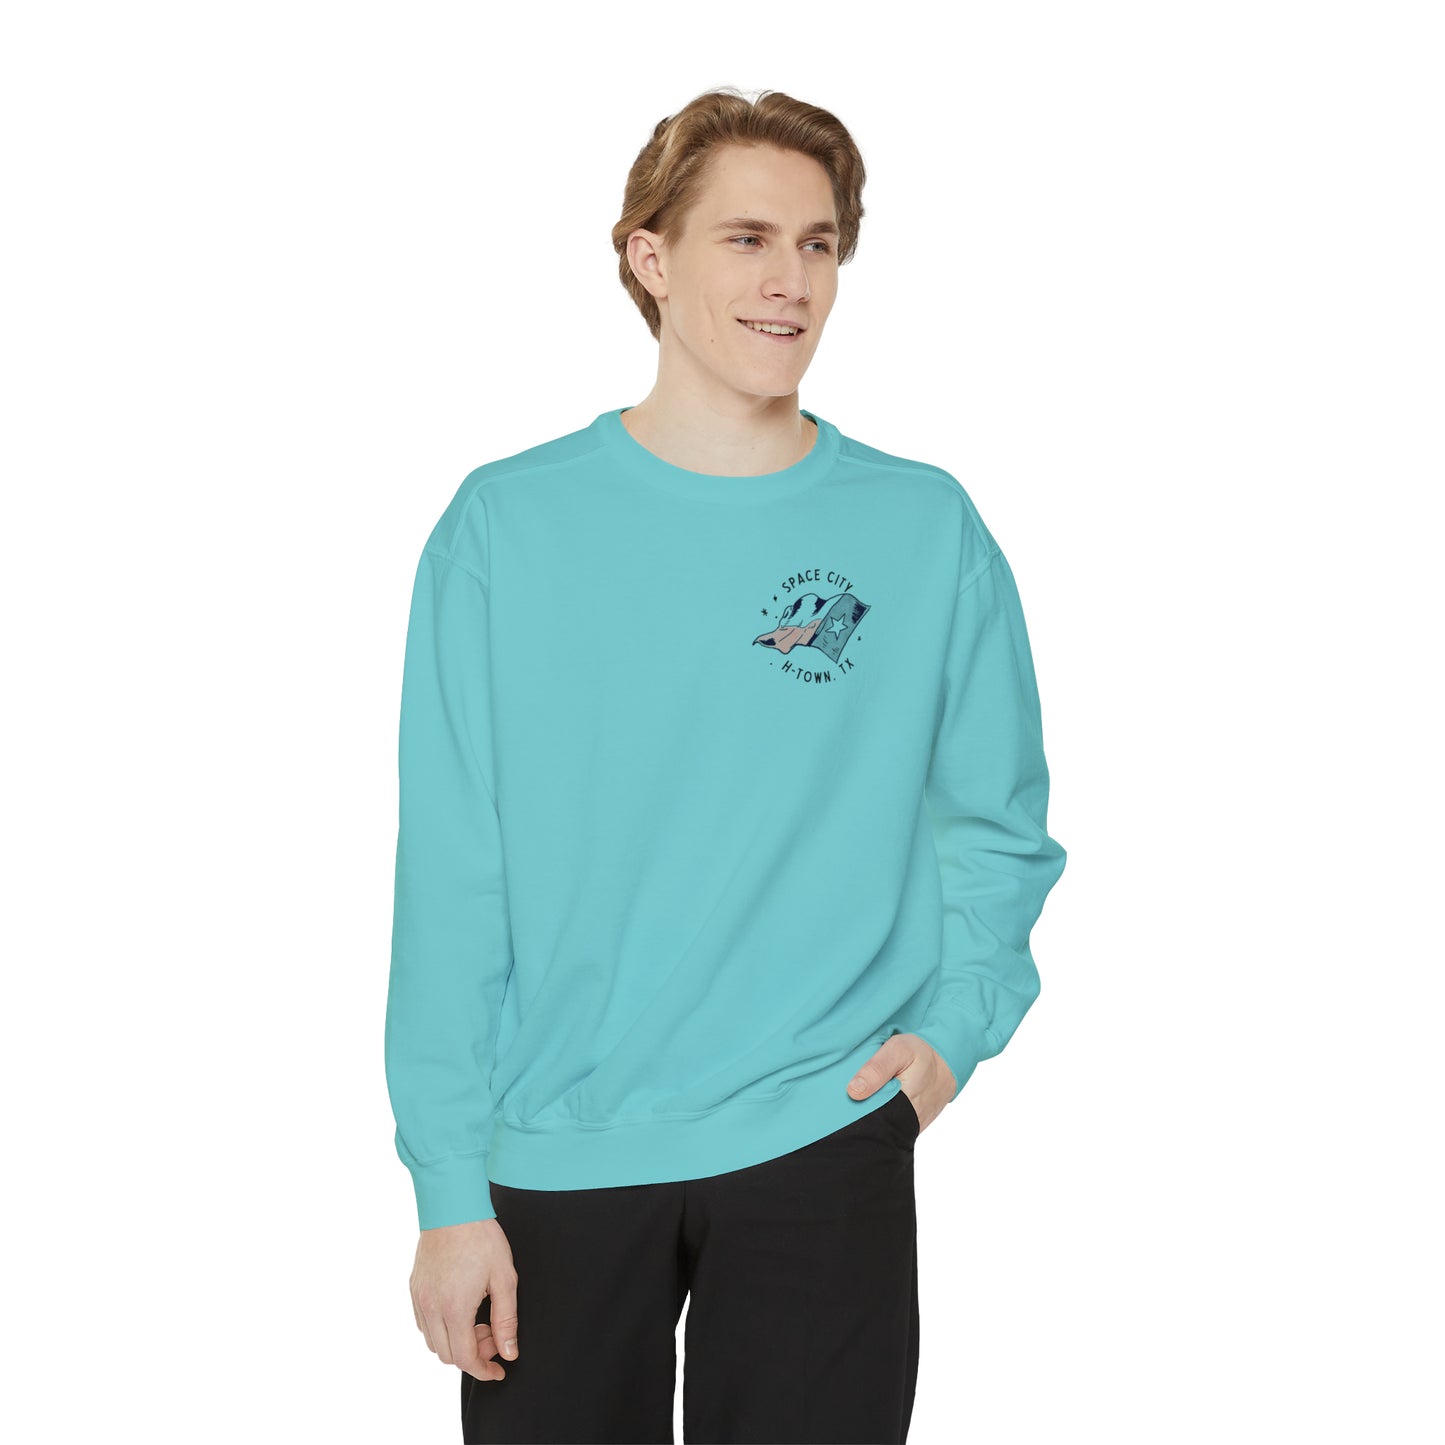 Space City Texas (Saturn) Unisex Comfort Colors Sweatshirt